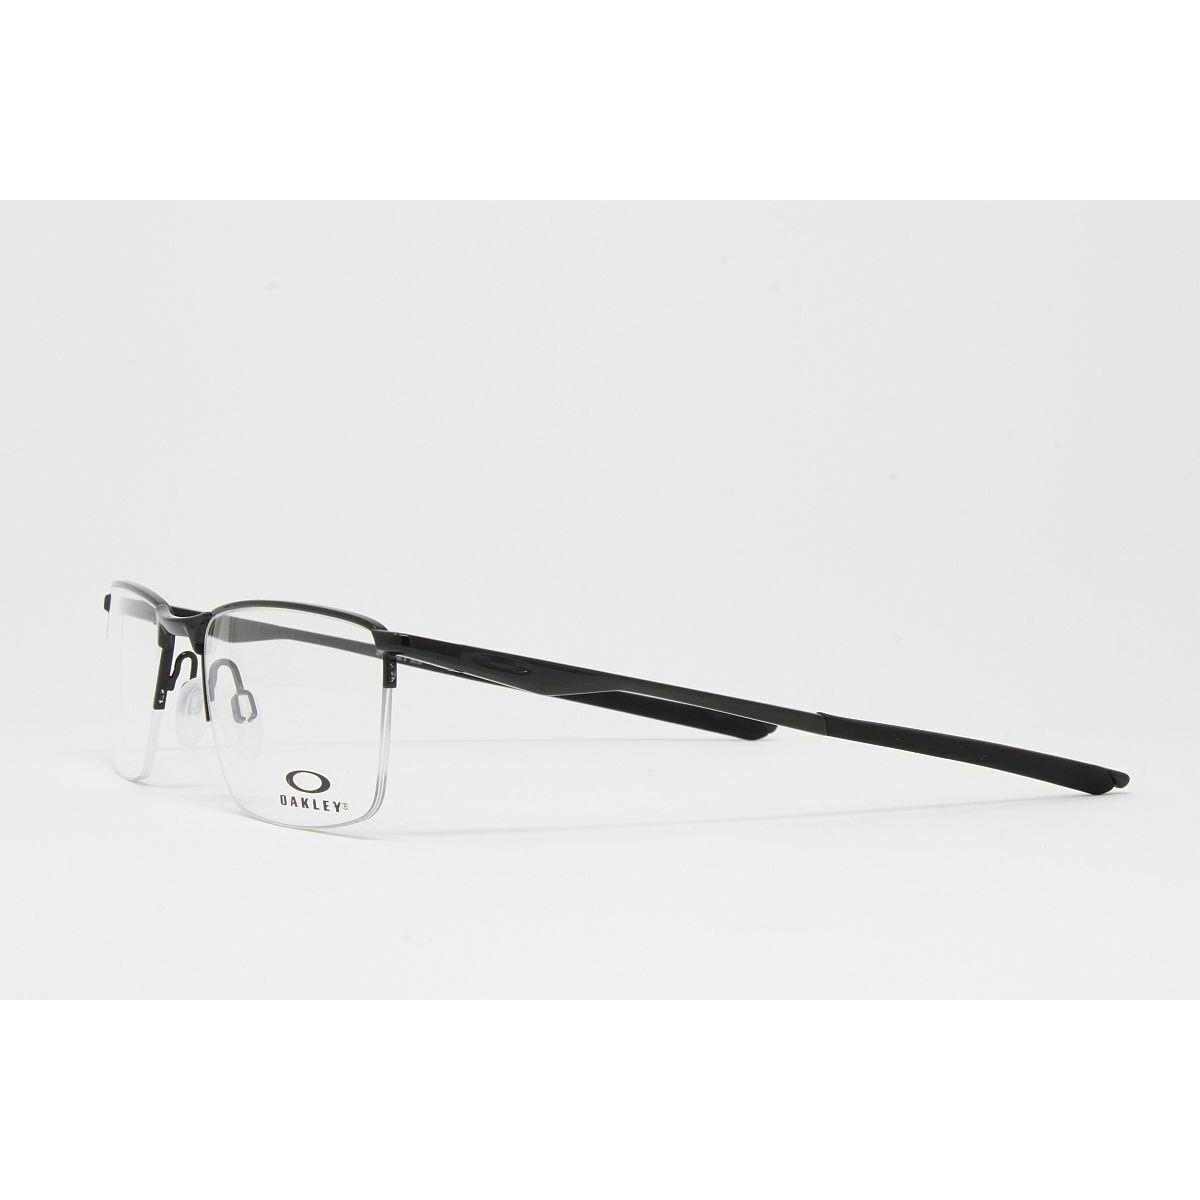 Oakley eyeglasses Socket - Black Frame